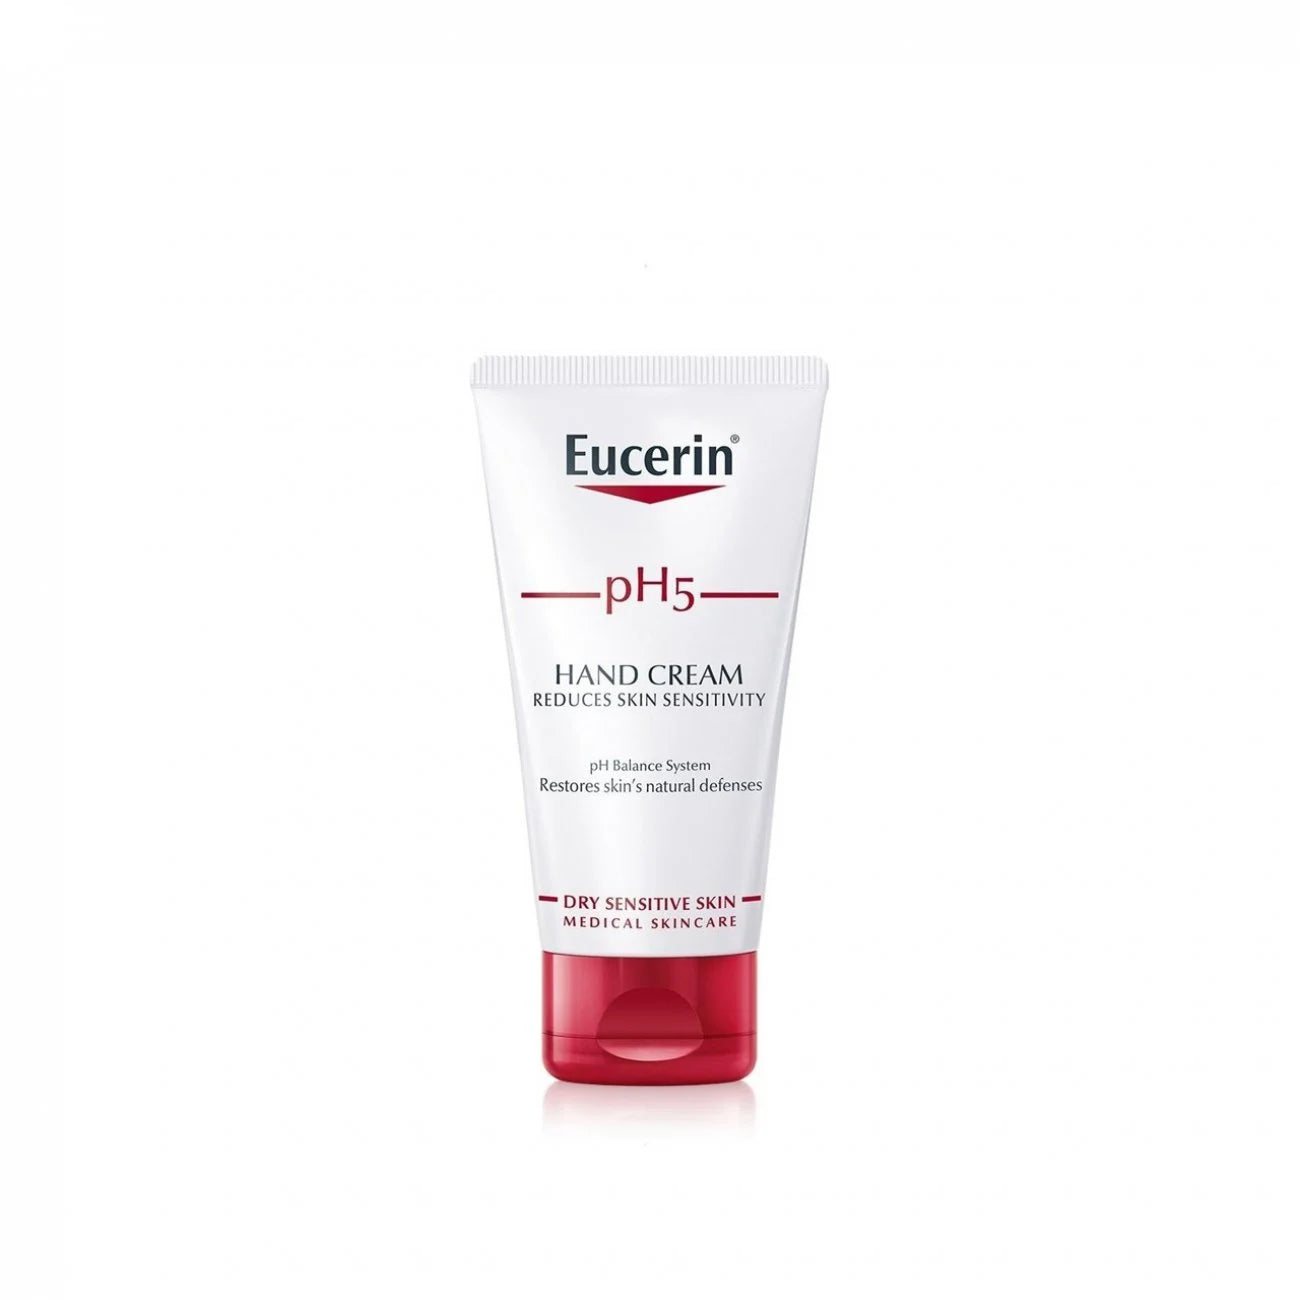 Eucerin Ph5 Hand Cream 100ml 33% Offer